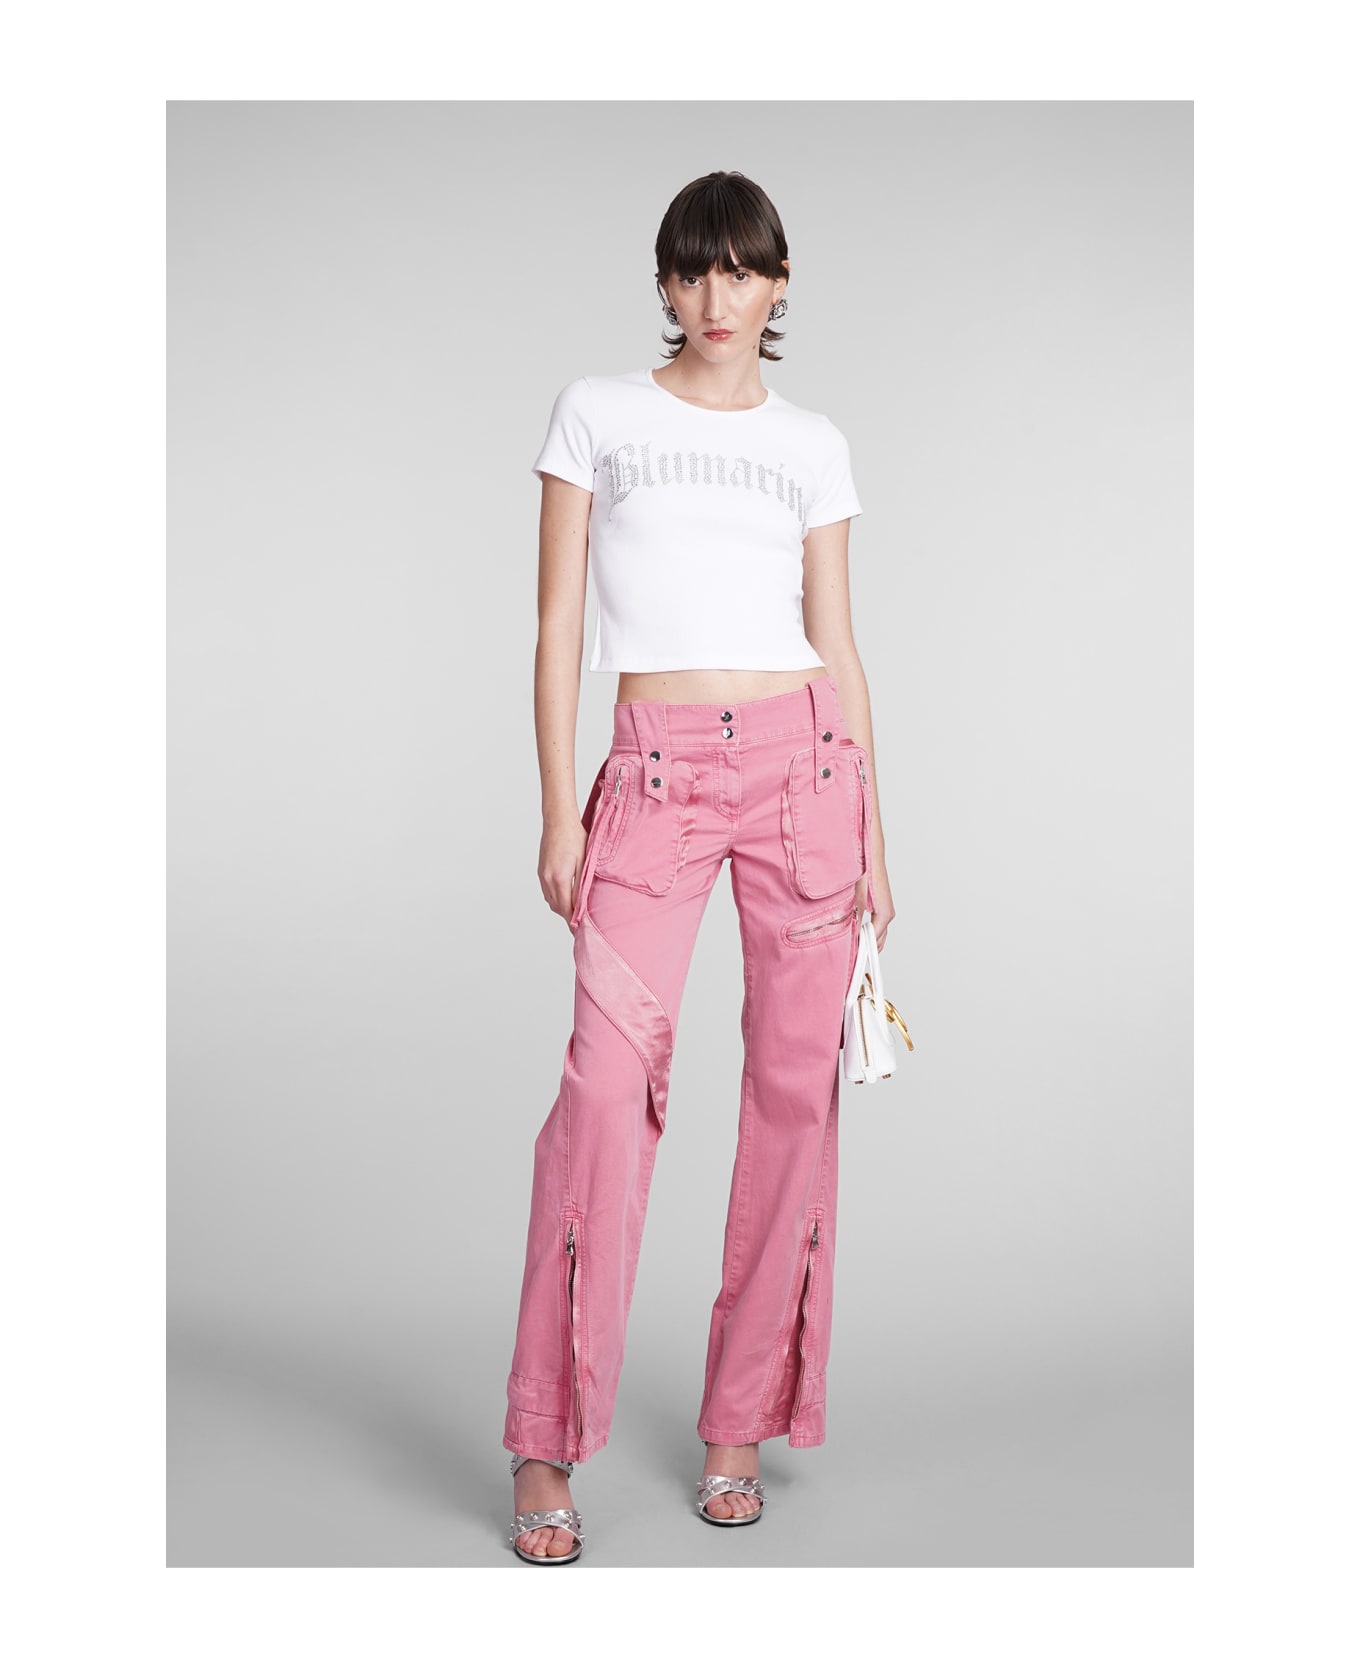 Blumarine Jeans In Rose-pink Cotton - rose-pink ボトムス